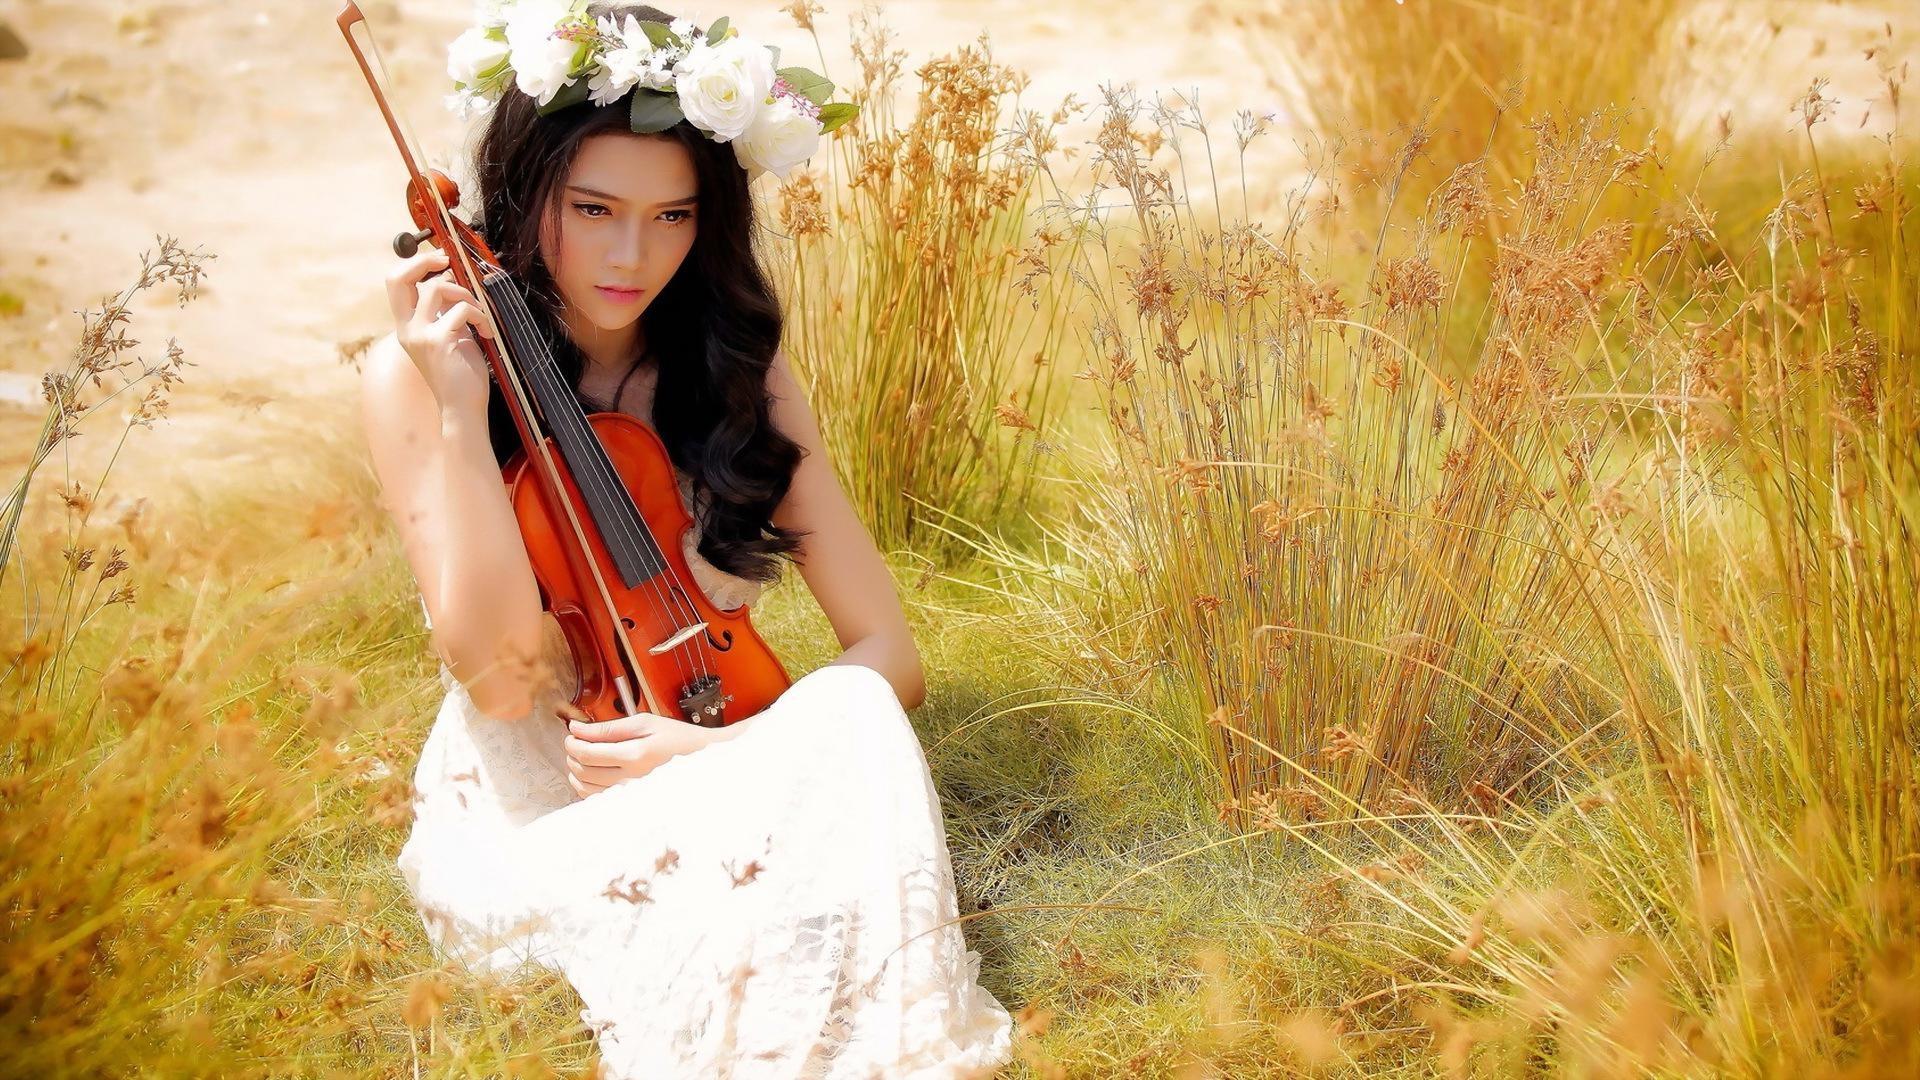 Free download Bride Violin Music GIrl in Field HD Wallpaper New HD